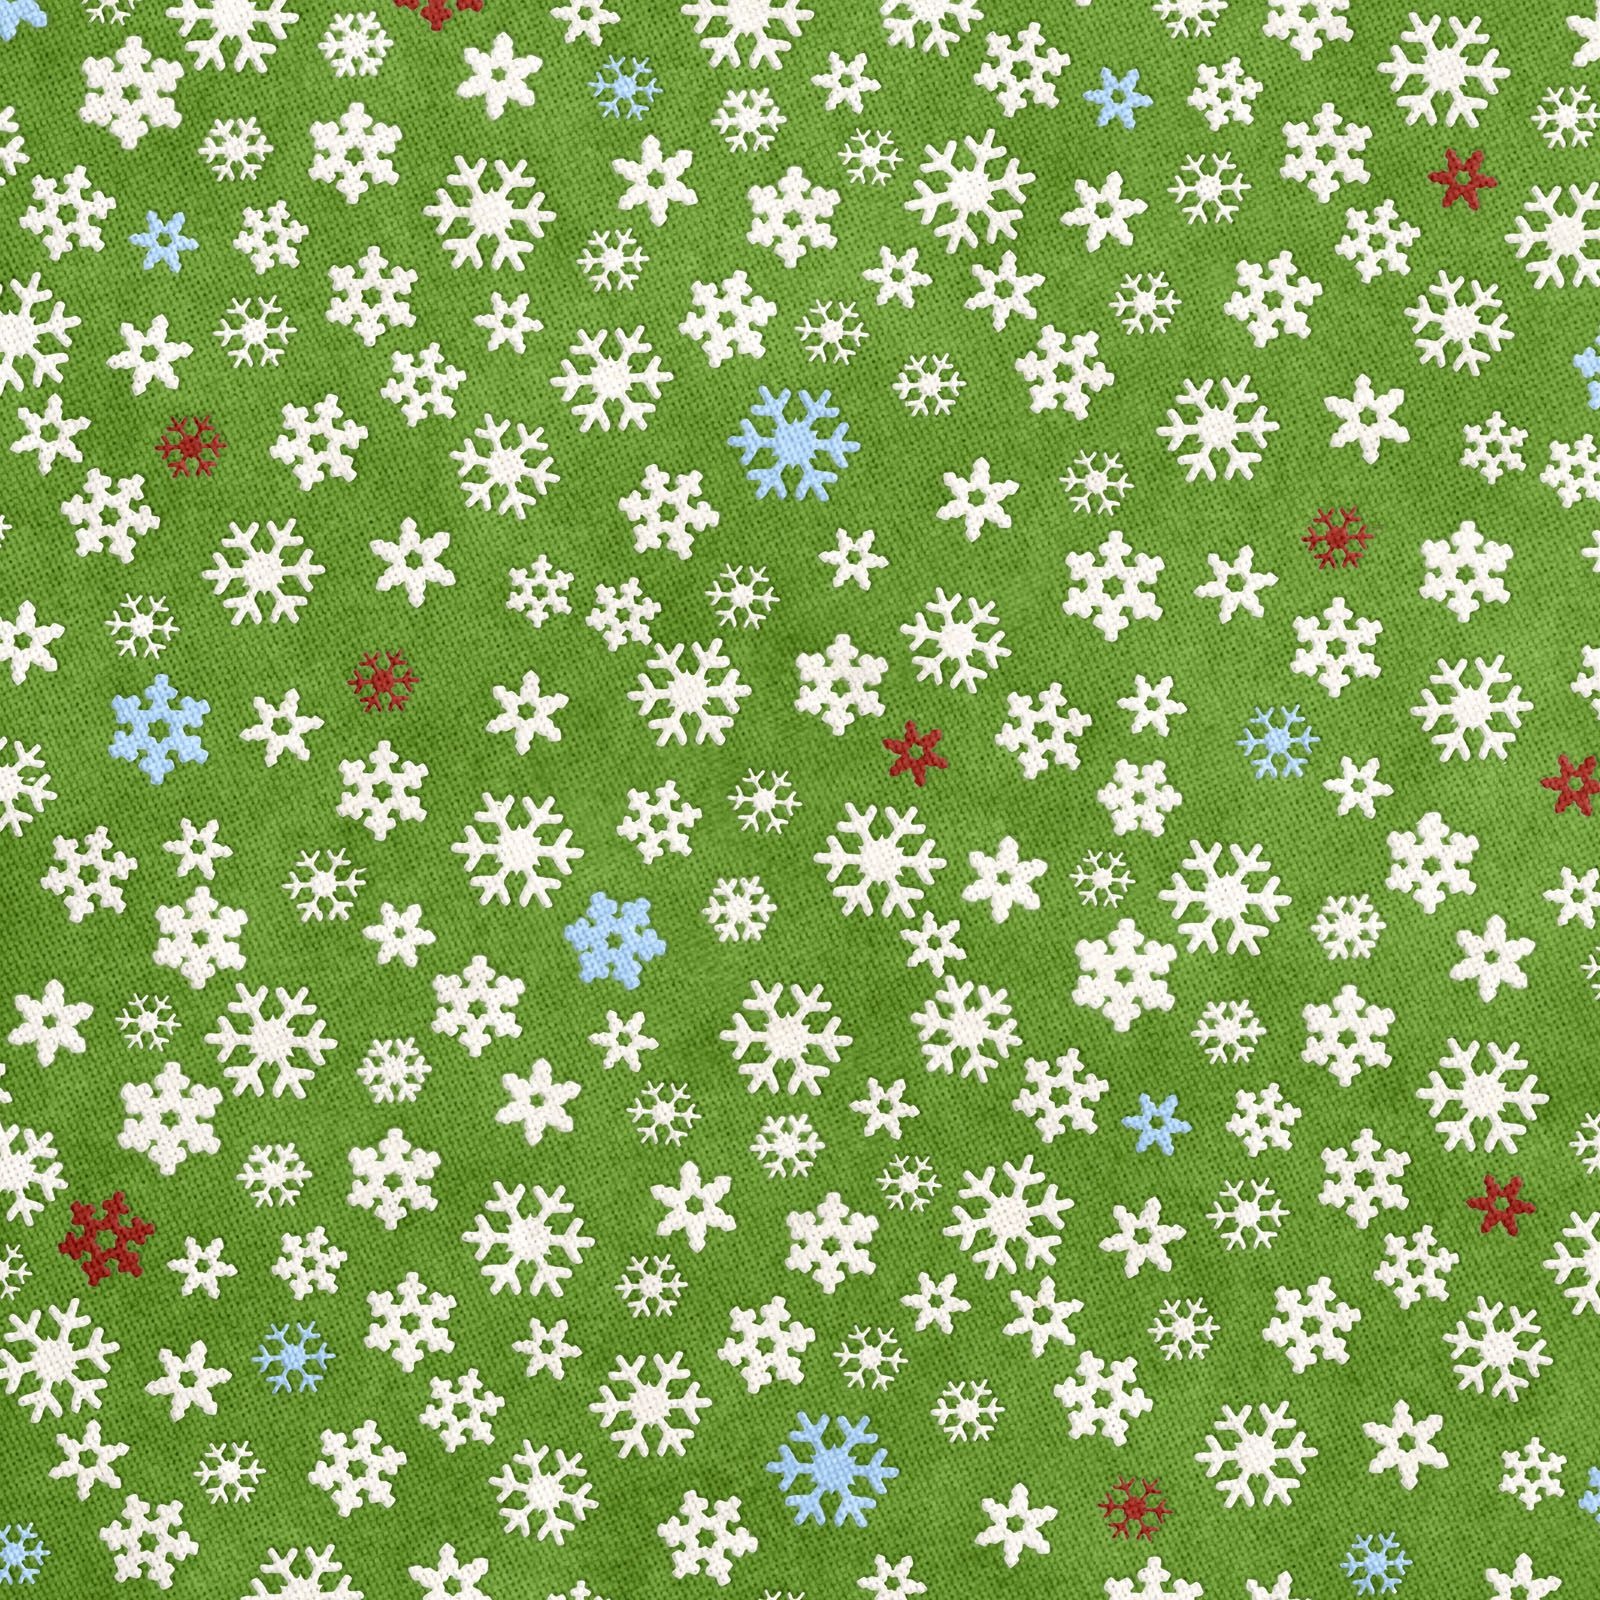 Free Printable Christmas Gift Wrapping Paper - Snowflakes On Green - Free Printable Christmas Paper